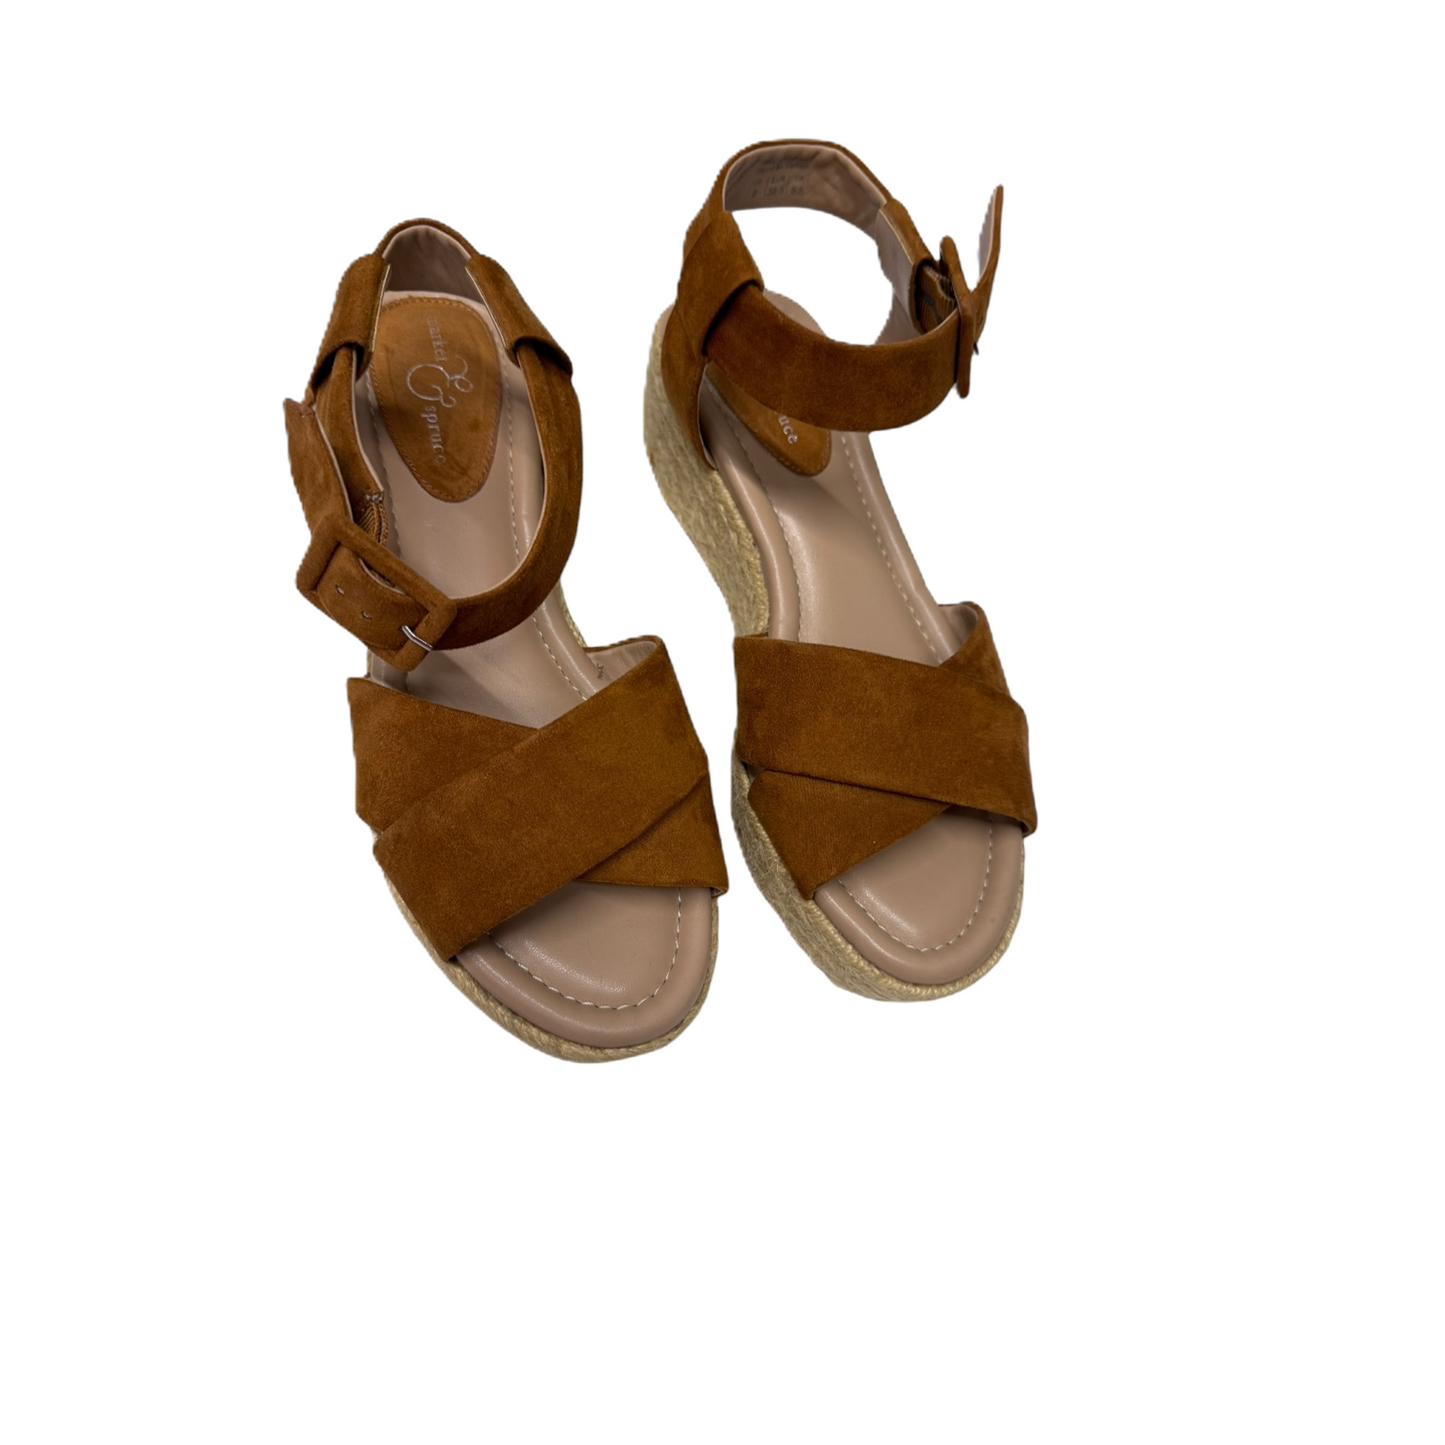 Sandals Heels Wedge By Market & Spruce  Size: 8